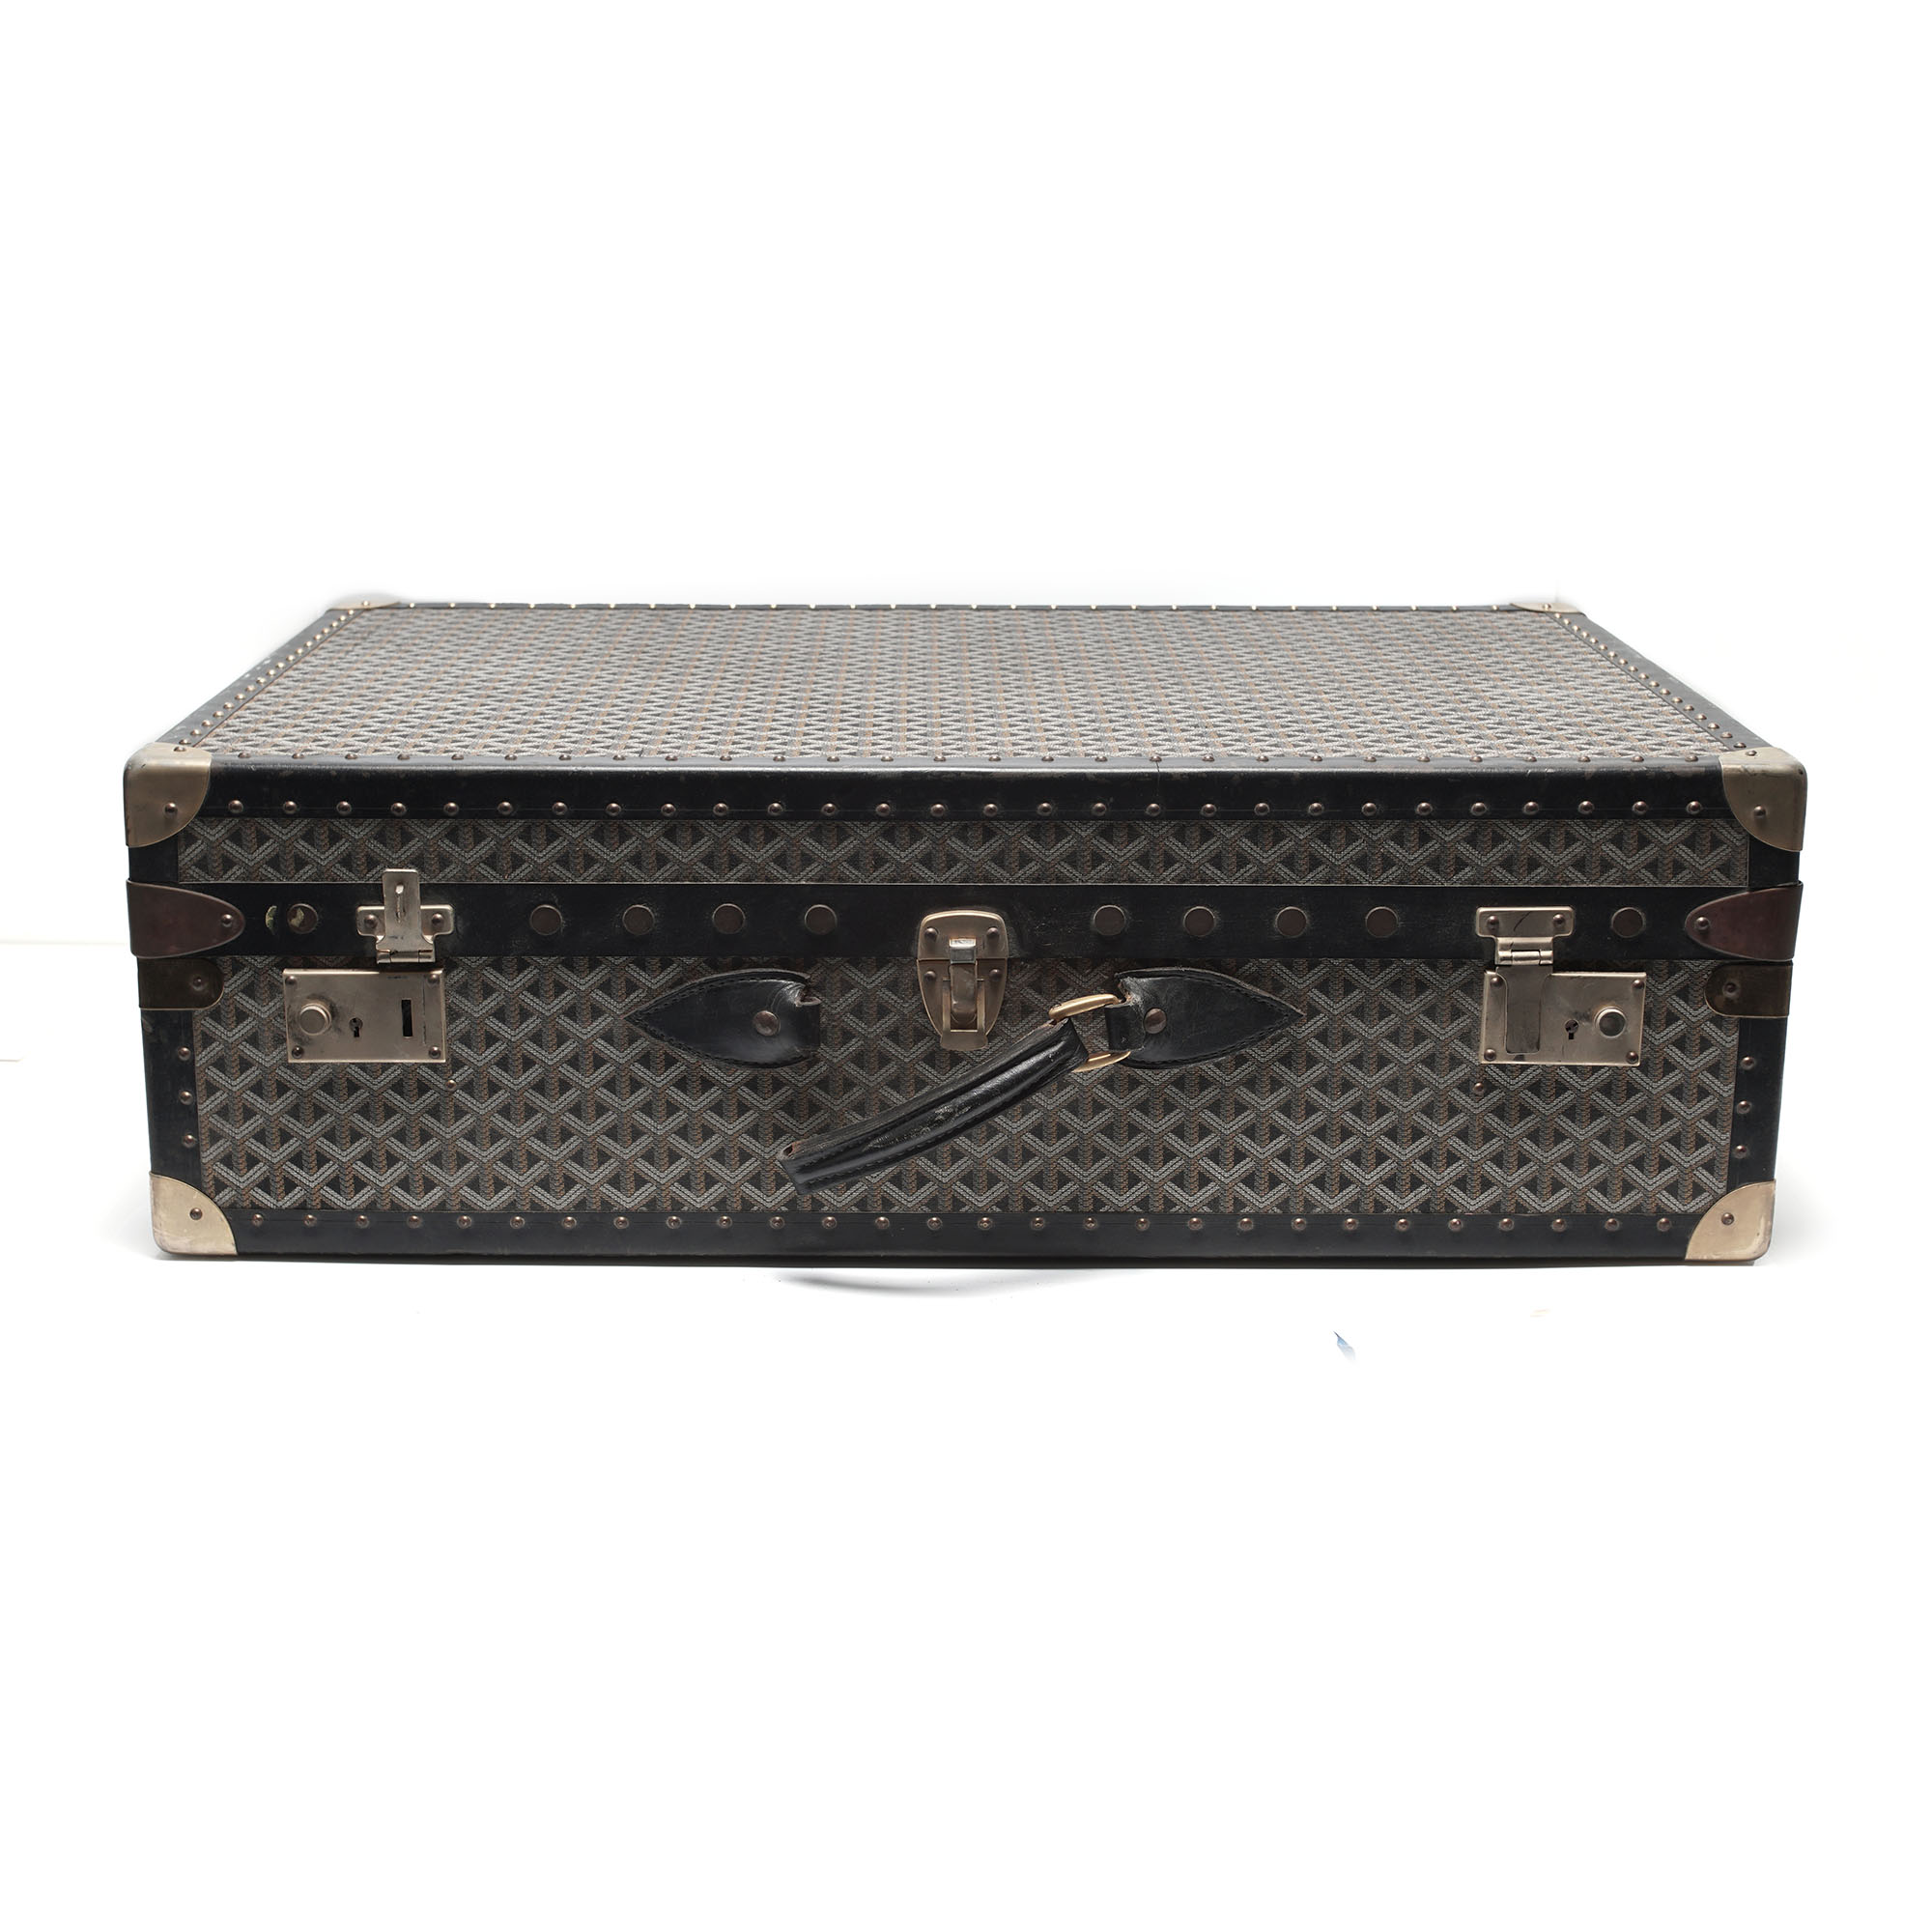 Sold at Auction: Maison Goyard Vintage Hardside Travel Suitcase